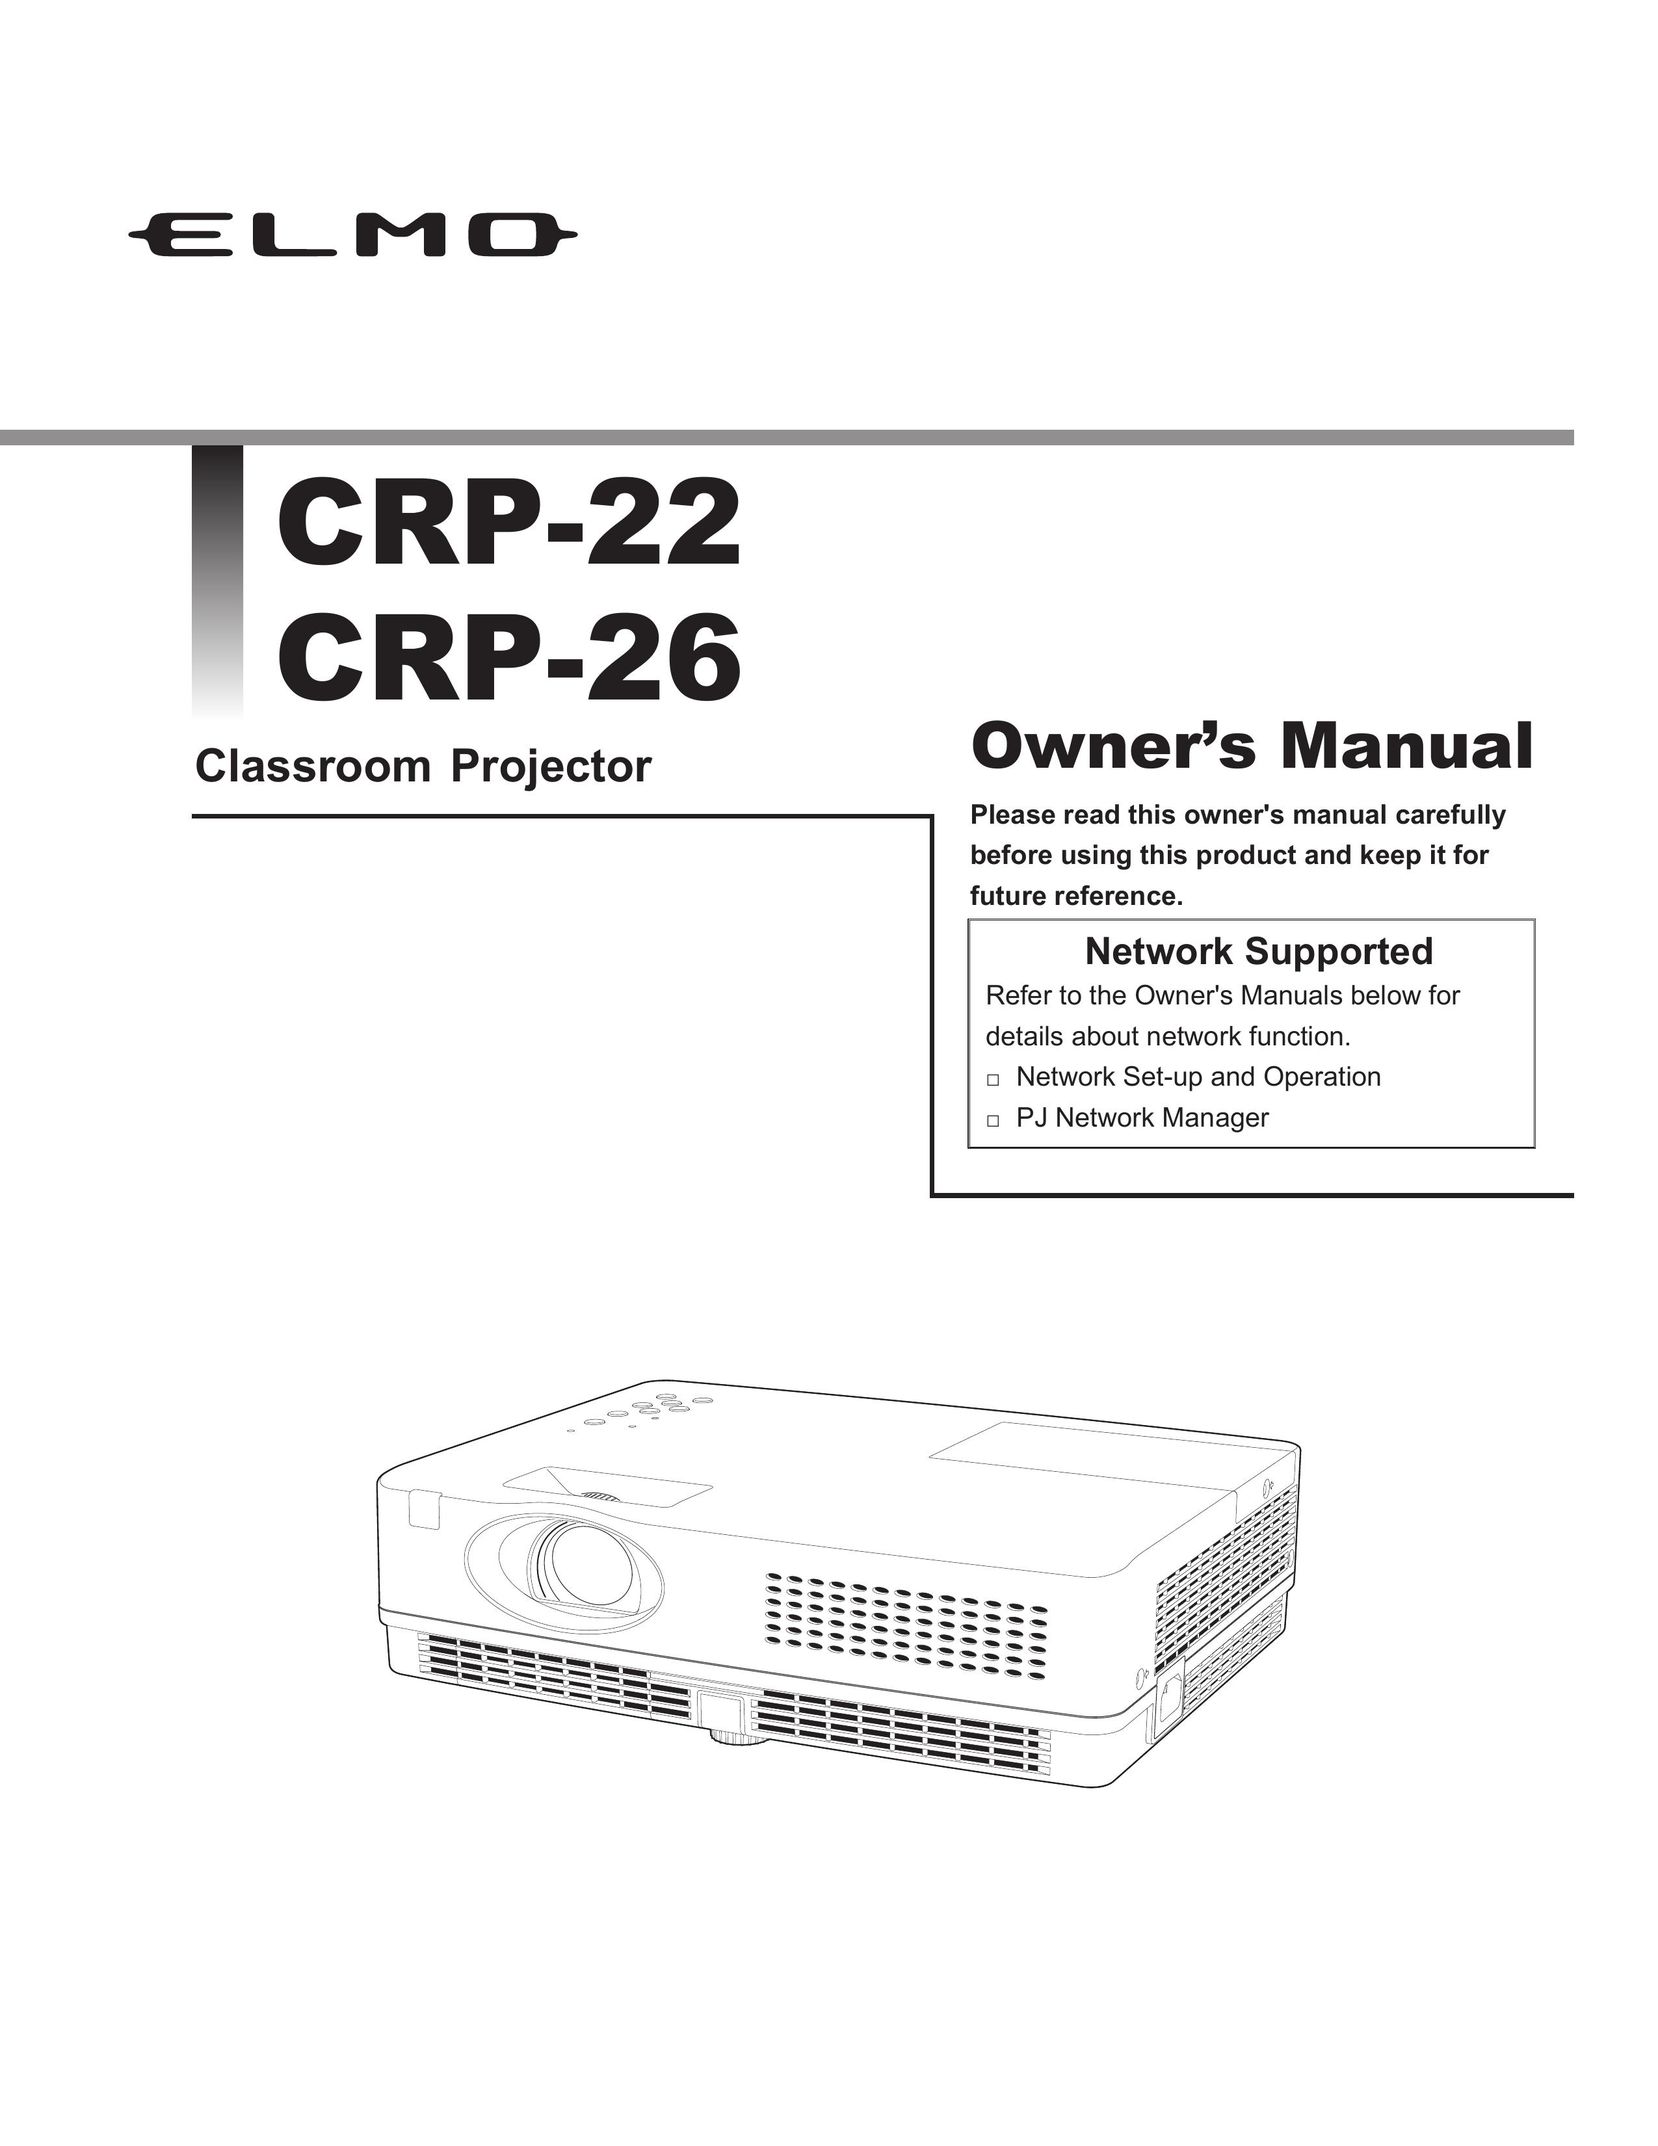 Elmo CRP-26 Projector User Manual